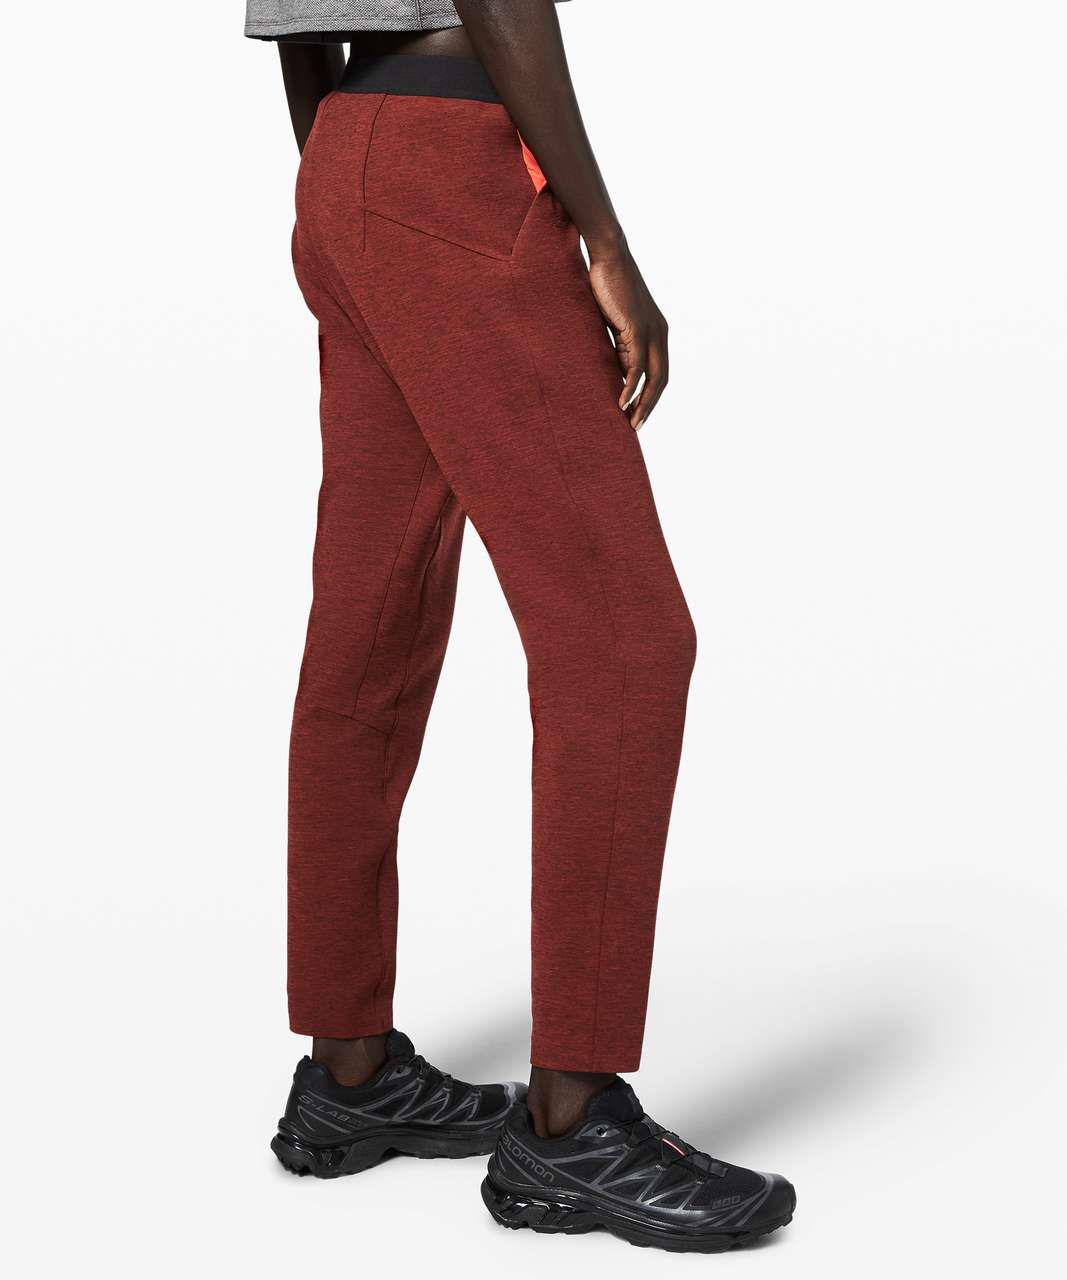 LULULEMON Esker Jogger LAB Women's Pants Size 12 Brick Red/Black NEW w/Tags  $178